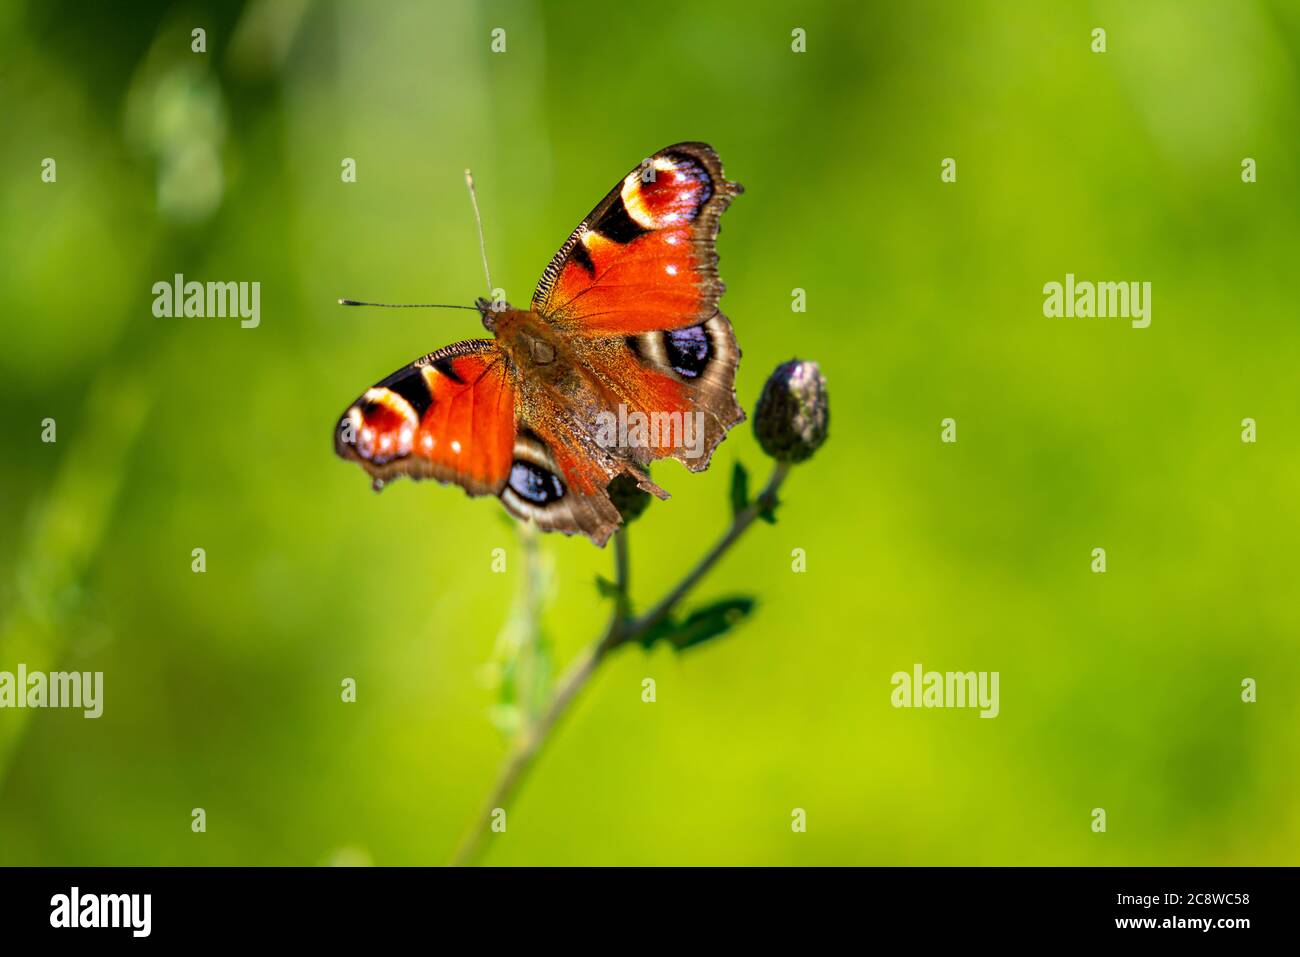 Mariposa, mariposa de pavo real, Aglais io, sobre una planta, cardo común, Foto de stock